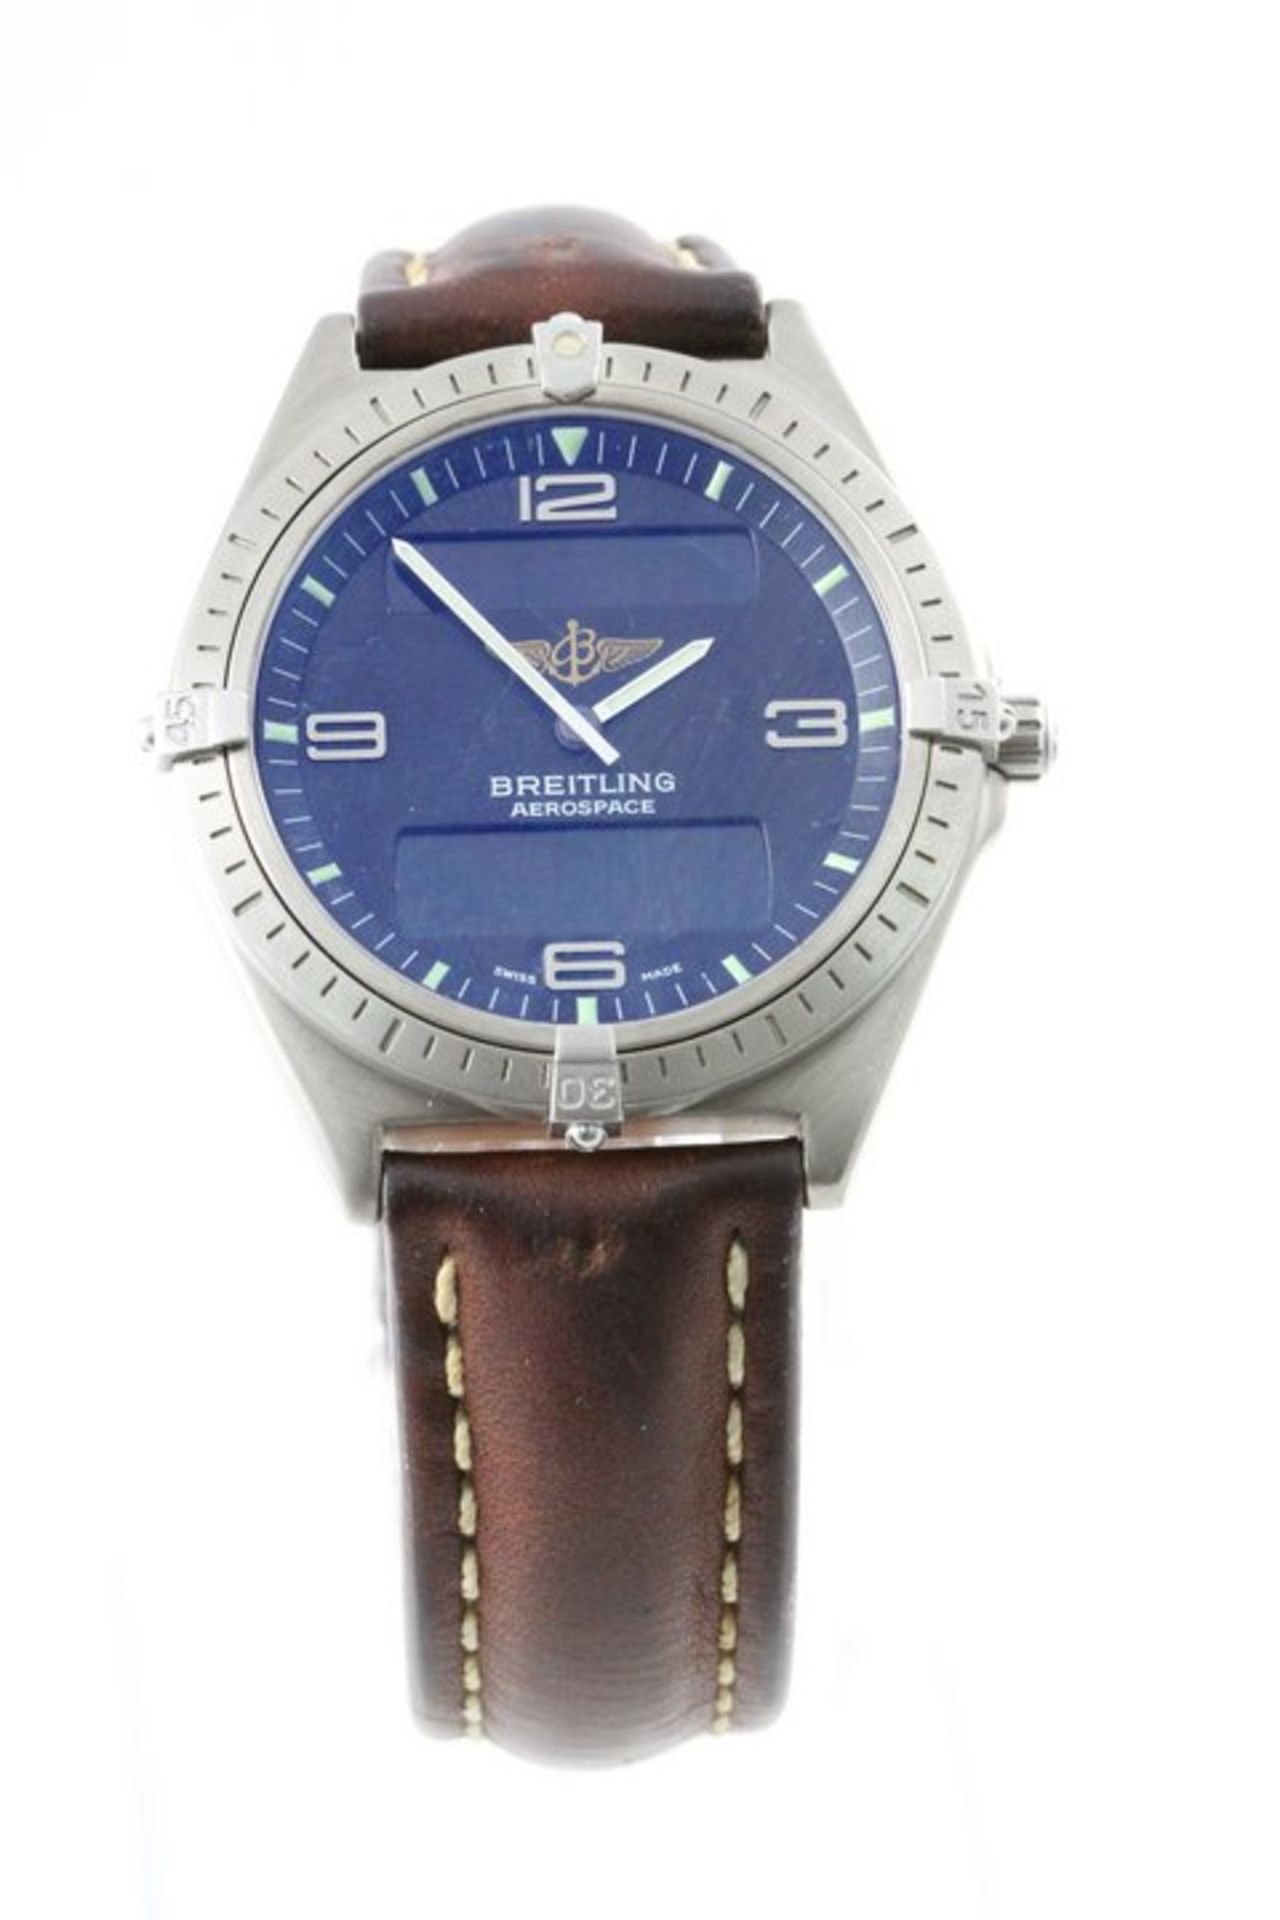 Breitling Aerospace Gents Titanium Watch - Image 6 of 8